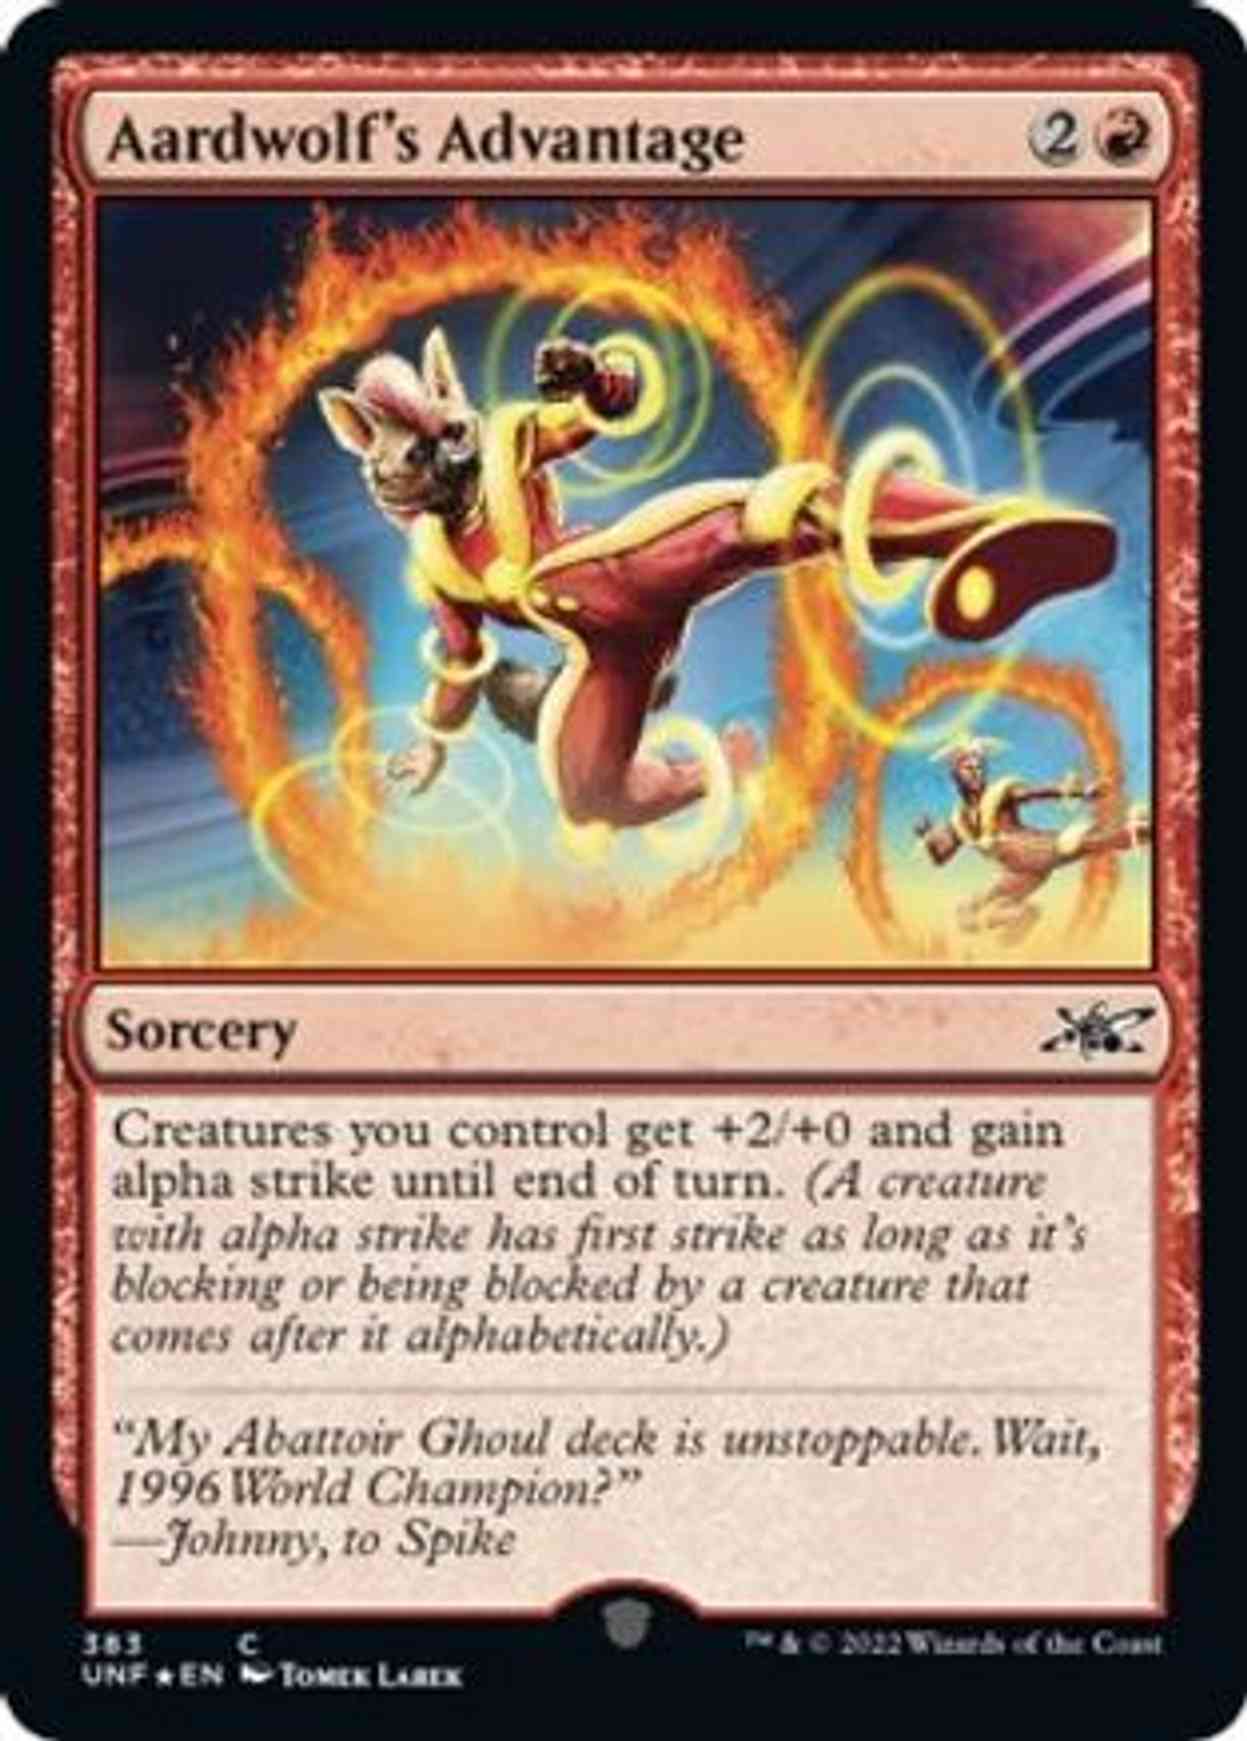 Aardwolf's Advantage (Galaxy Foil) magic card front